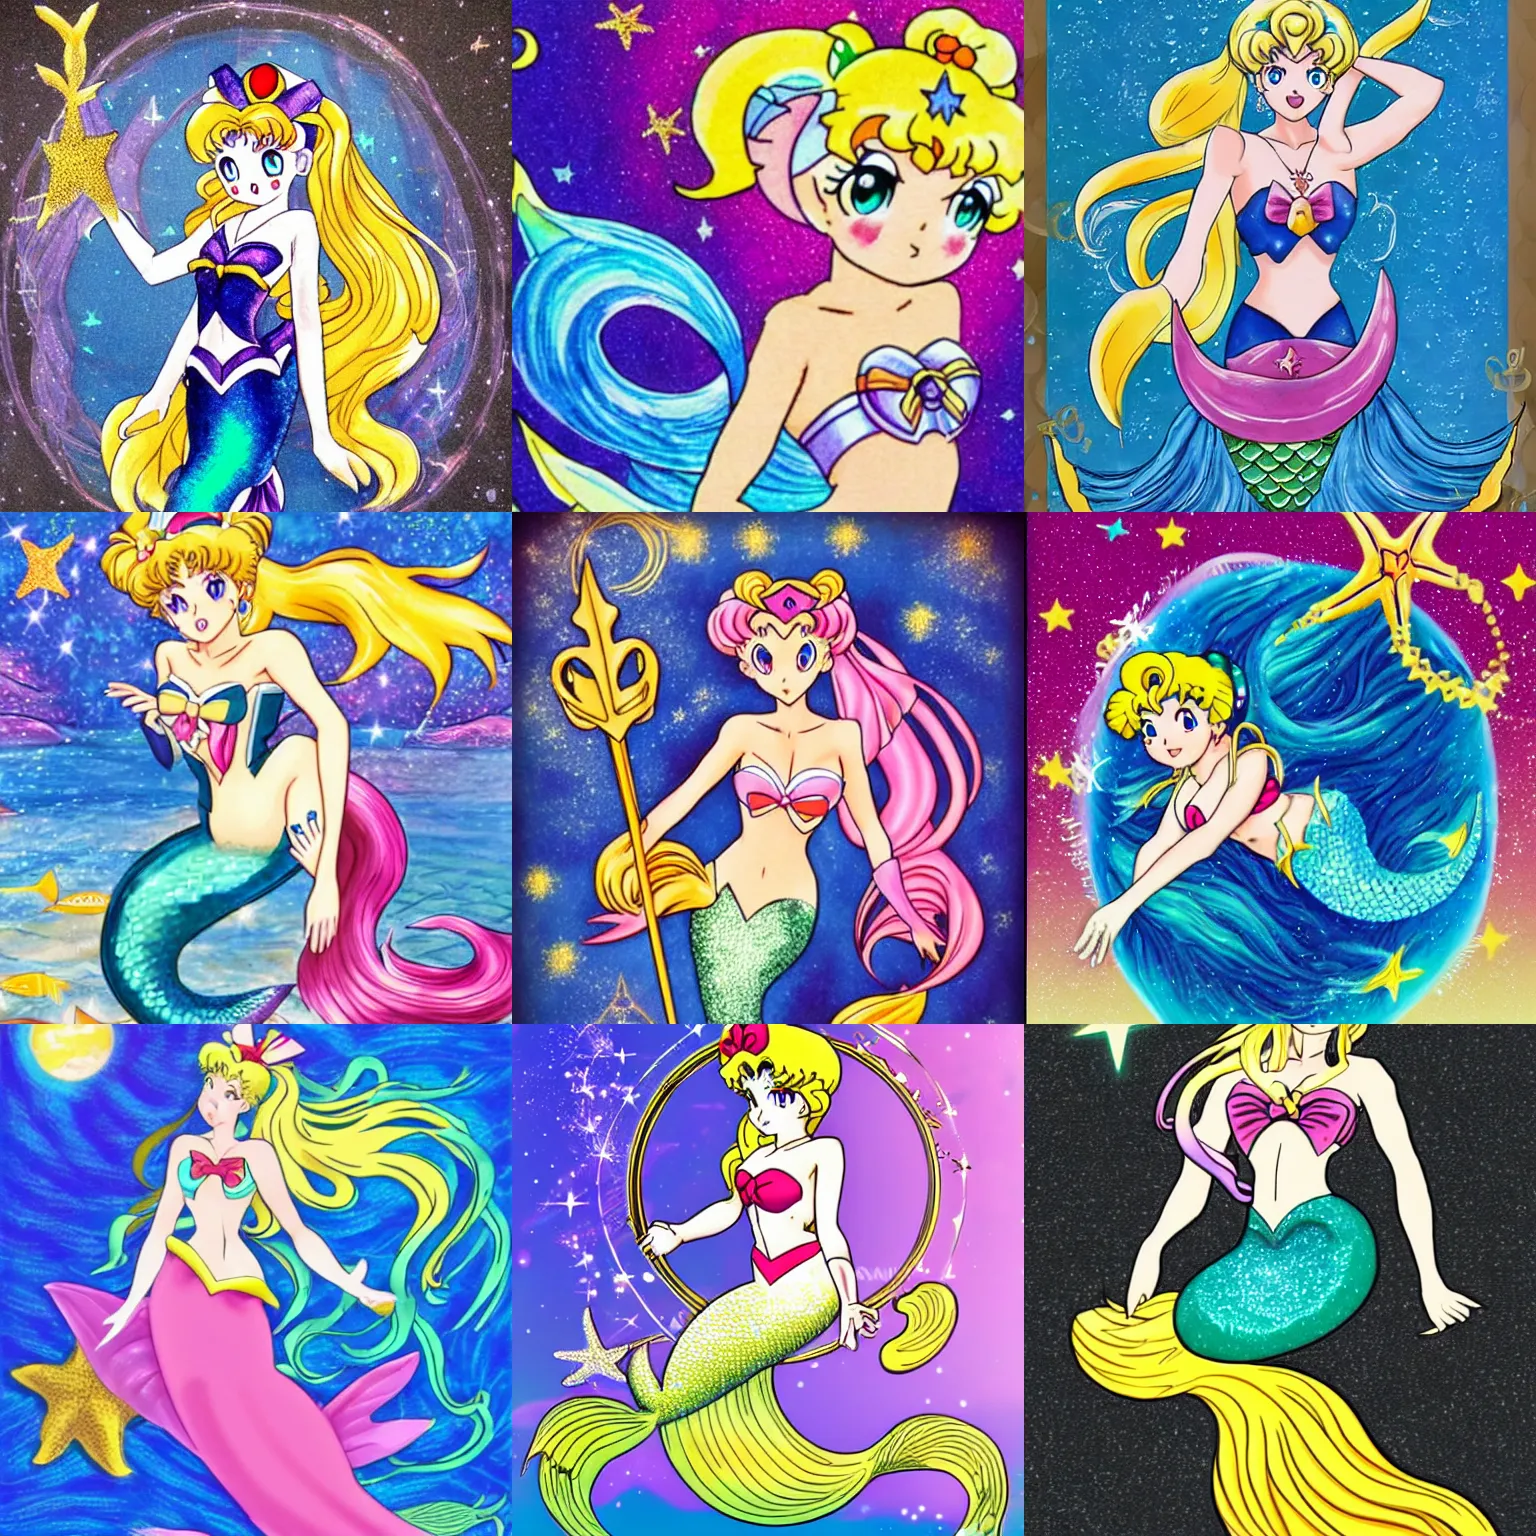 Prompt: sailor moon as a mermaid